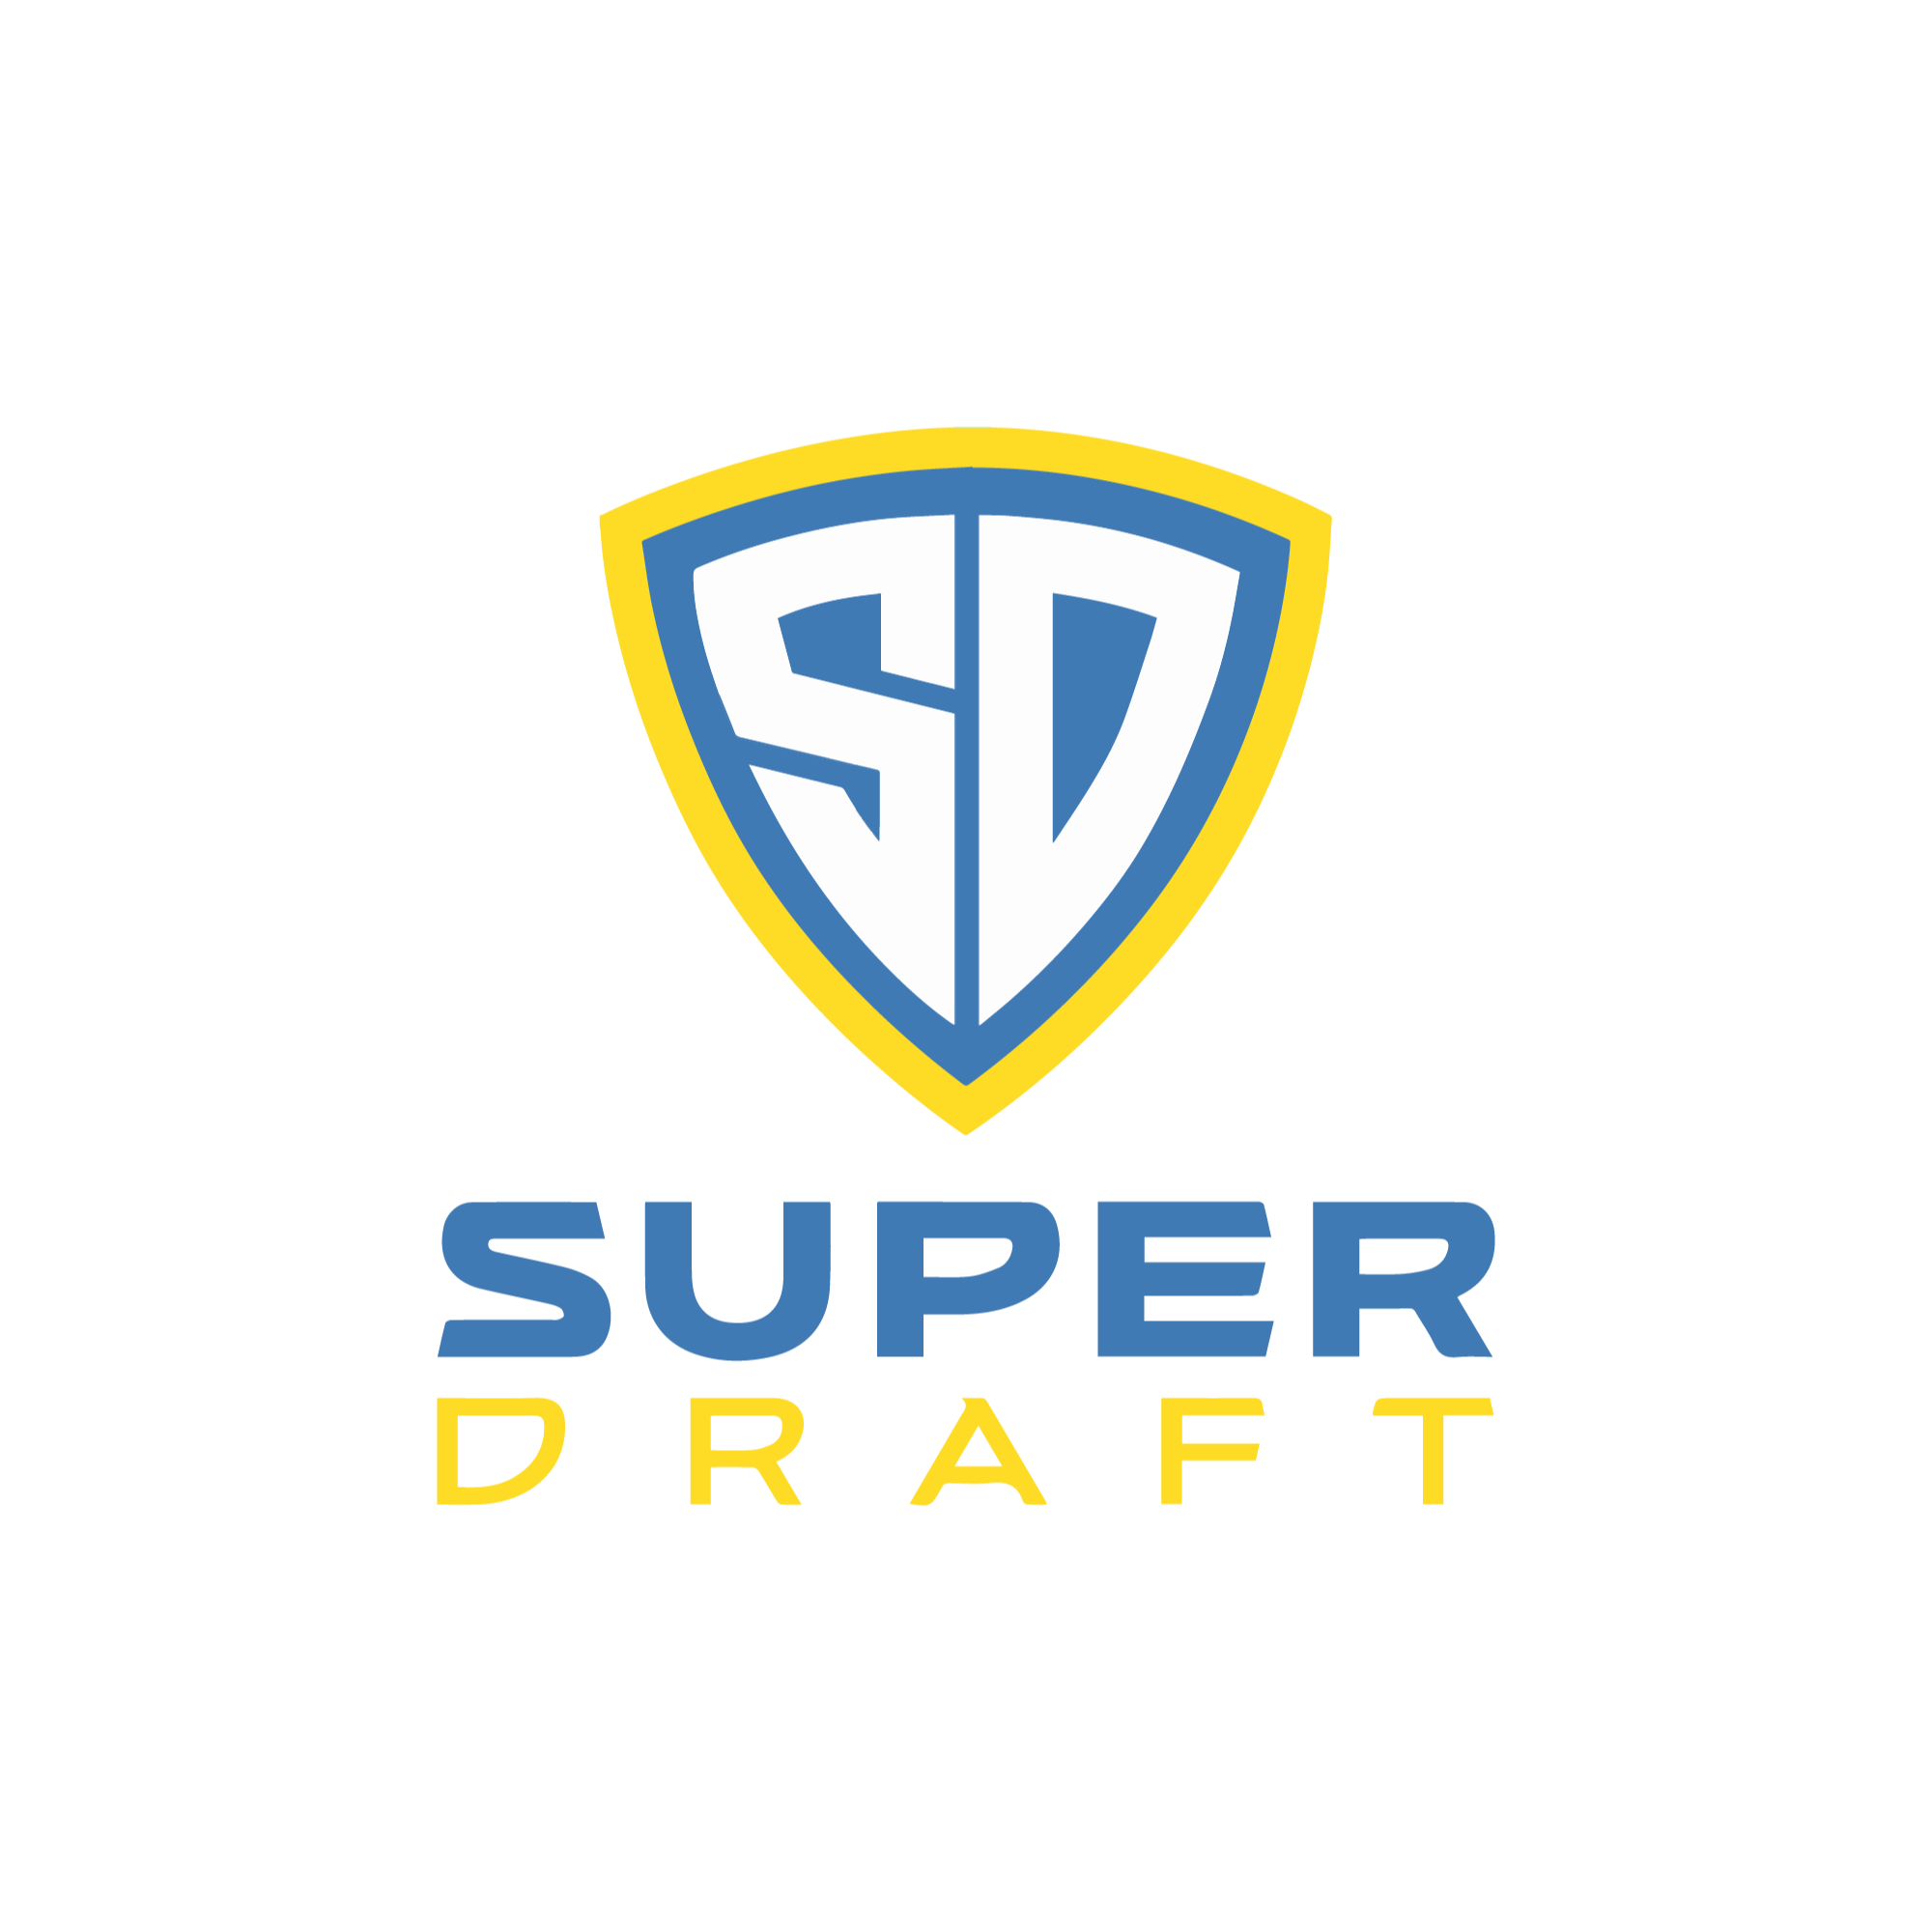 Super draft